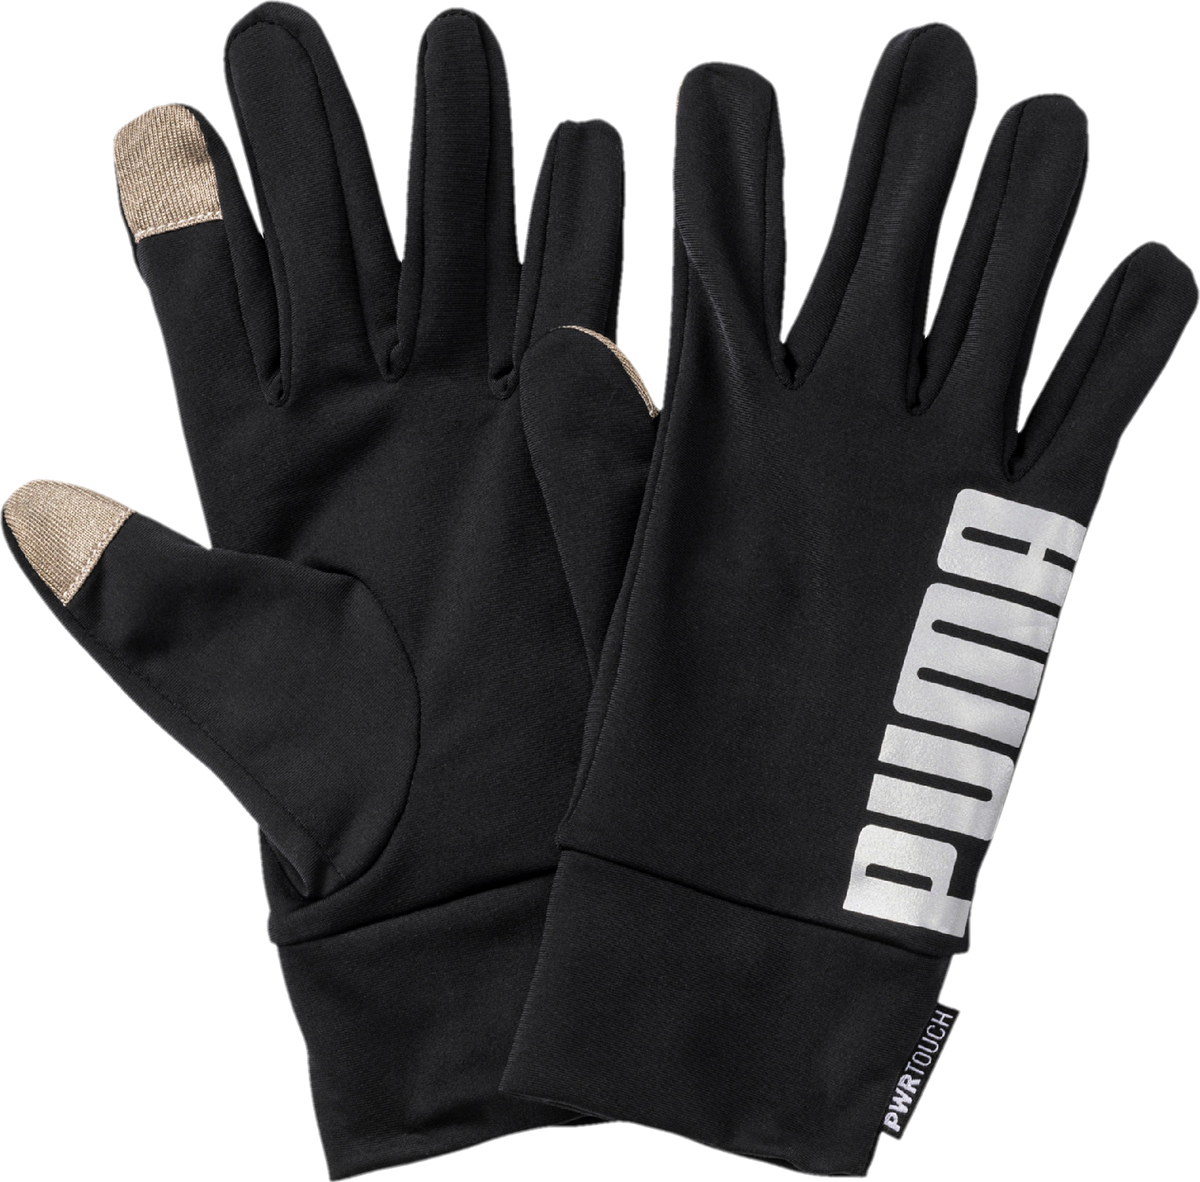 Перчатки Puma Pr Performance Gloves, цвет: черный. 04146101. Размер L (8)